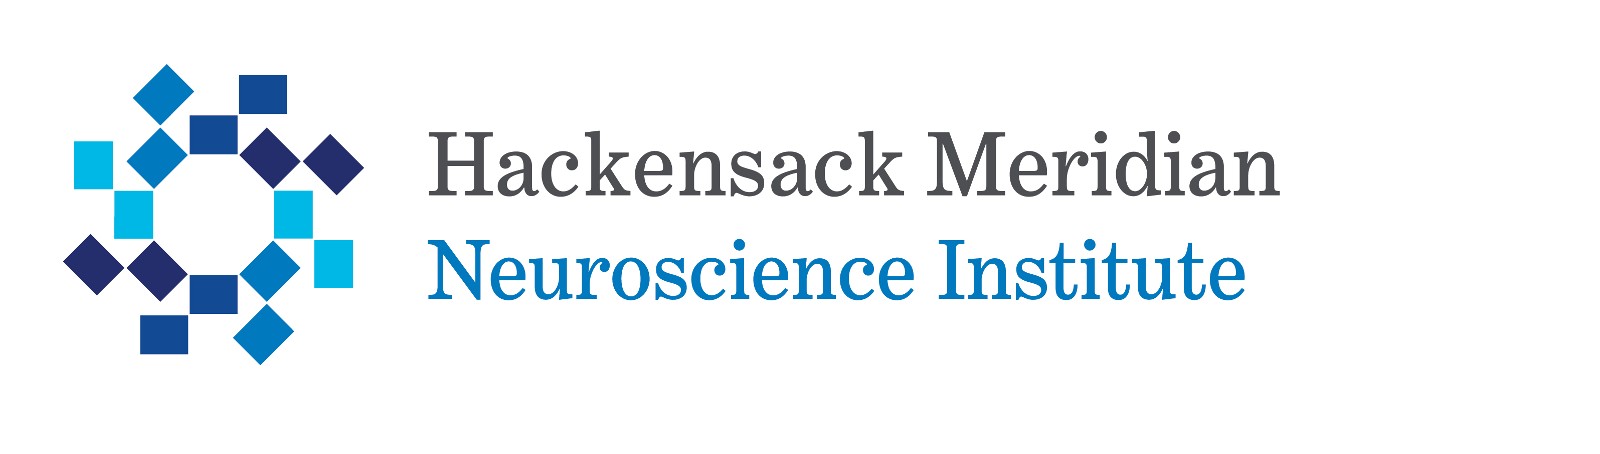 Hackensack Meridian Neuroscience Institute